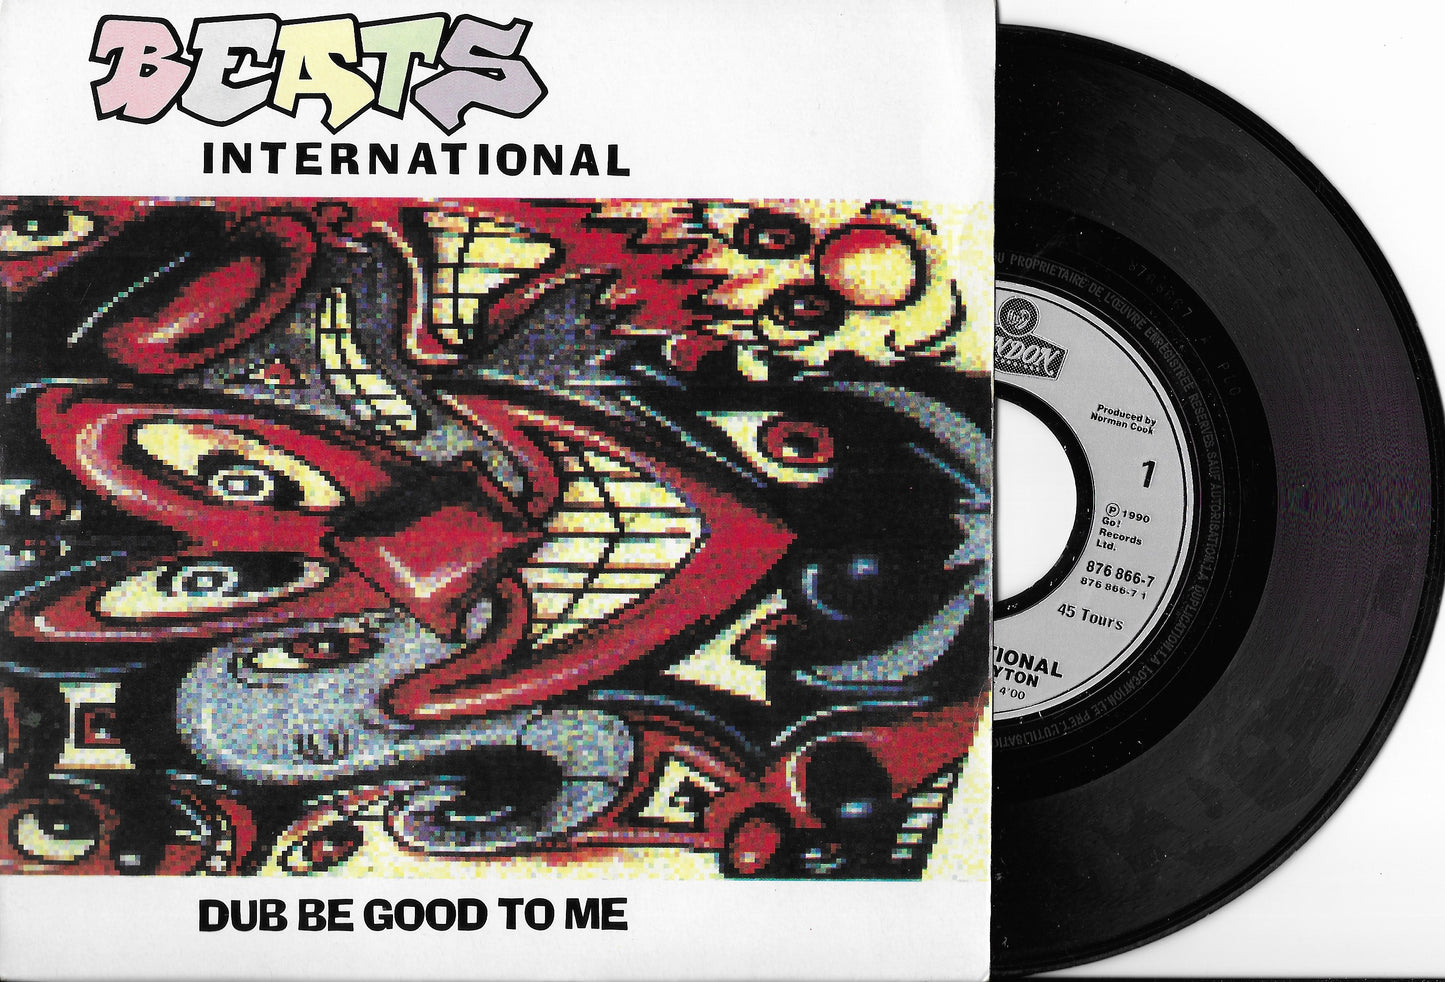 BEATS INTERNATIONAL - Dub Be Good To Me